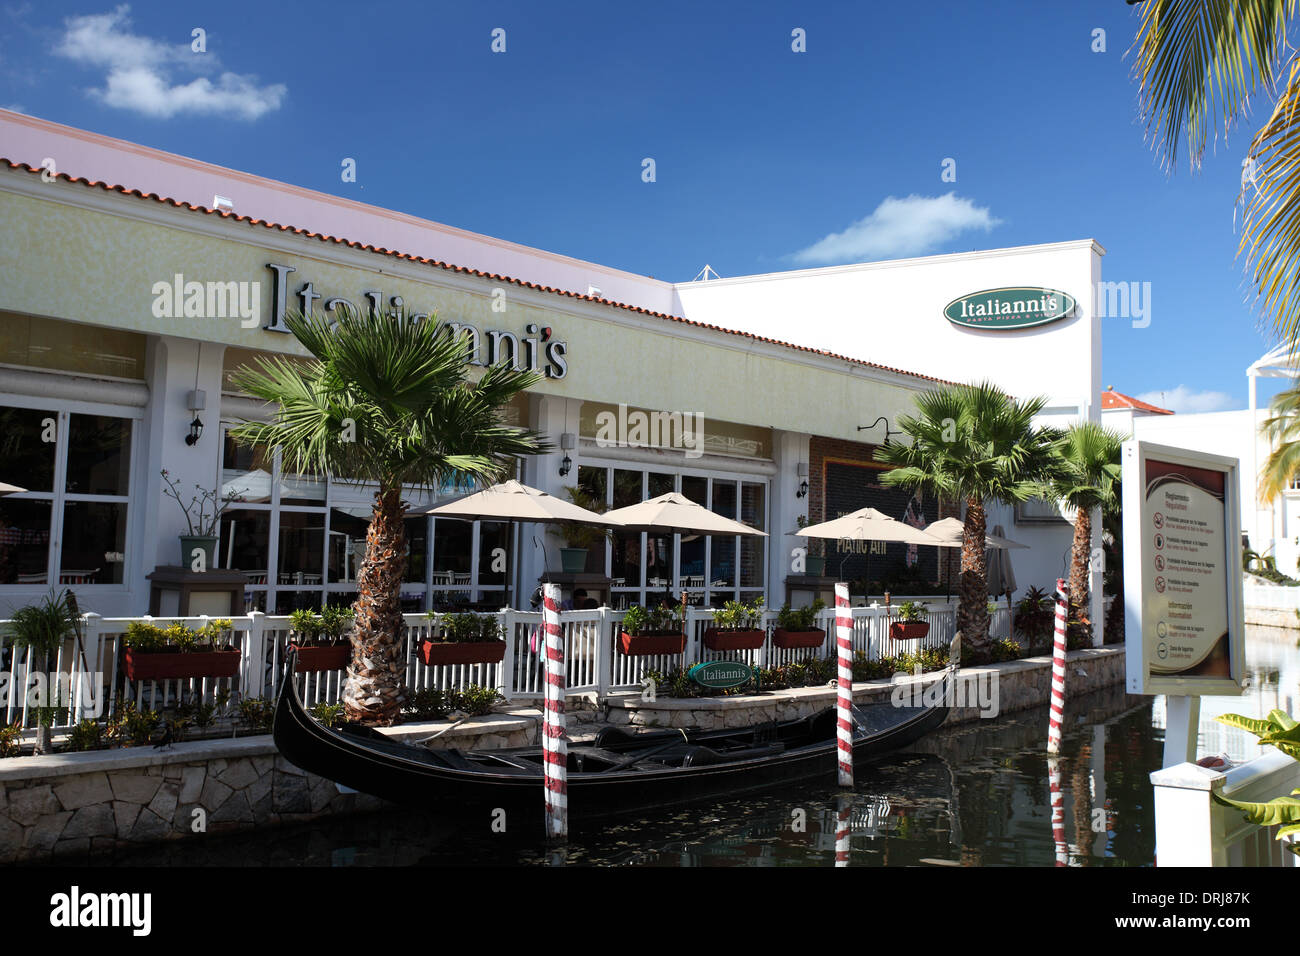 Italianni's Italian restaurant, La Isla shopping mall in Cancun Stock Photo